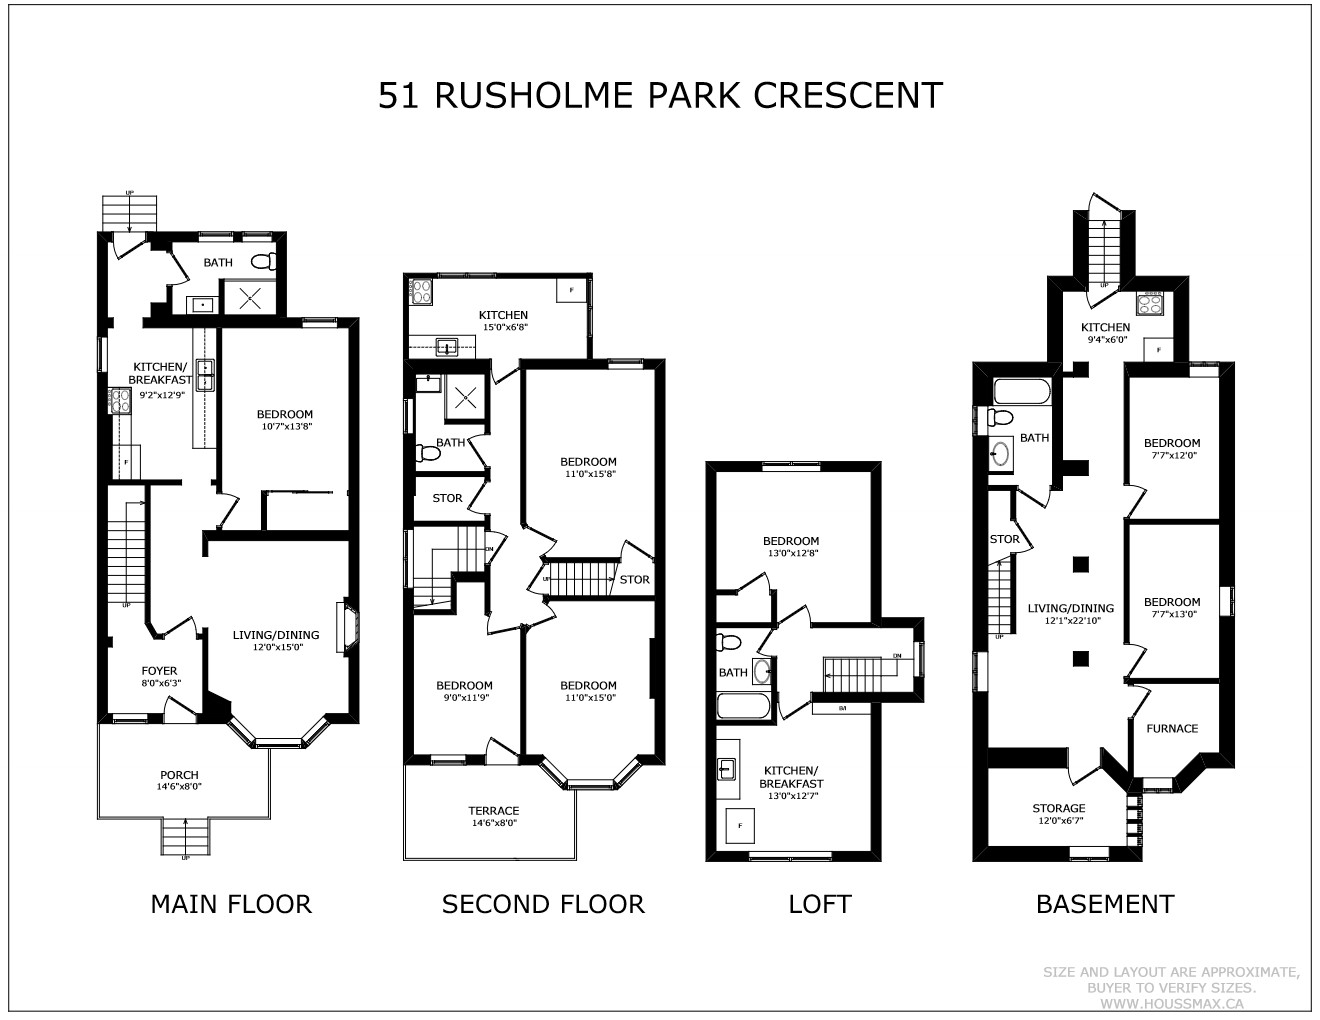 Floor plans for 51 Rusholme Park Crescent.